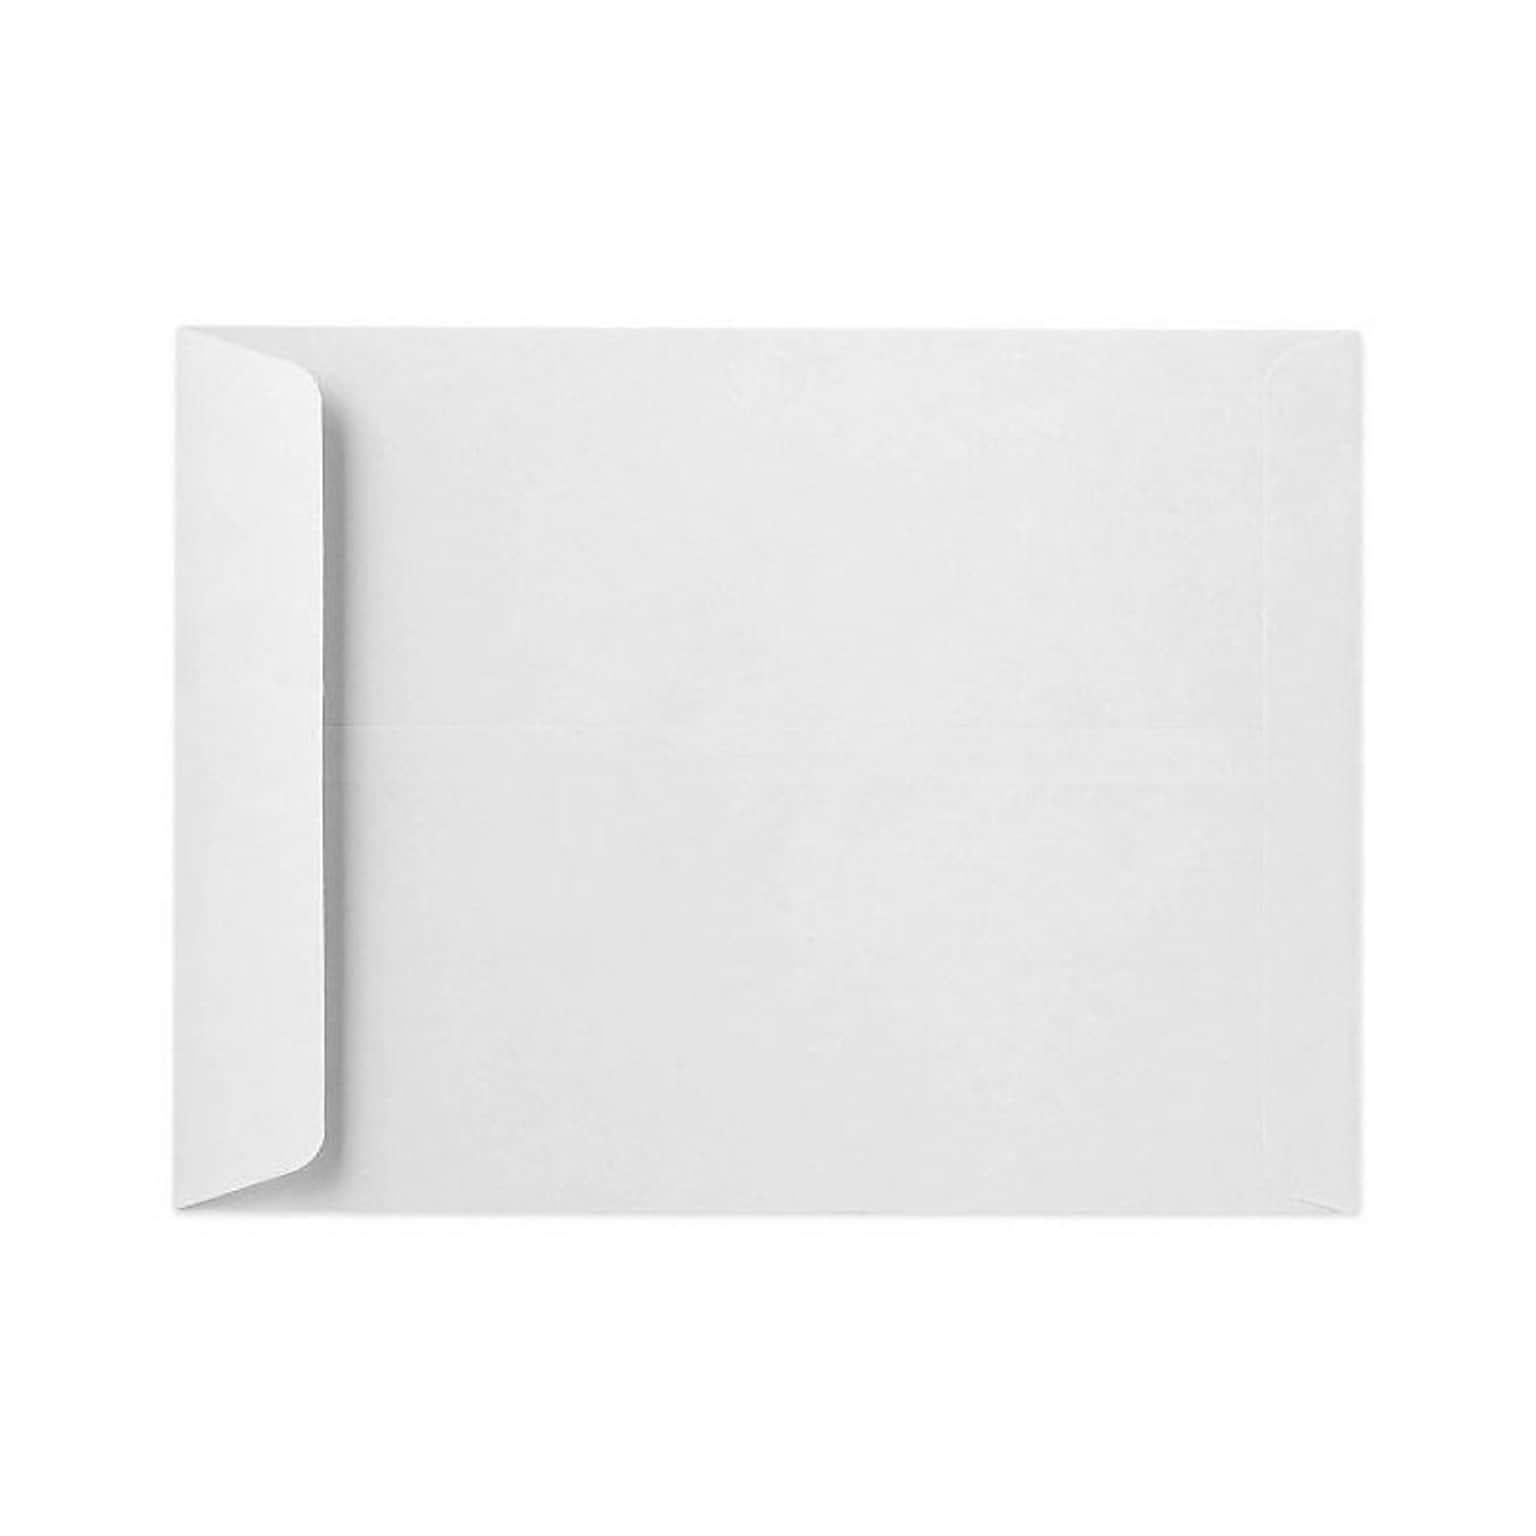 LUX Open End Catalog Envelopes, 11 x 17, Bright White, 250/Pack (85923-250)